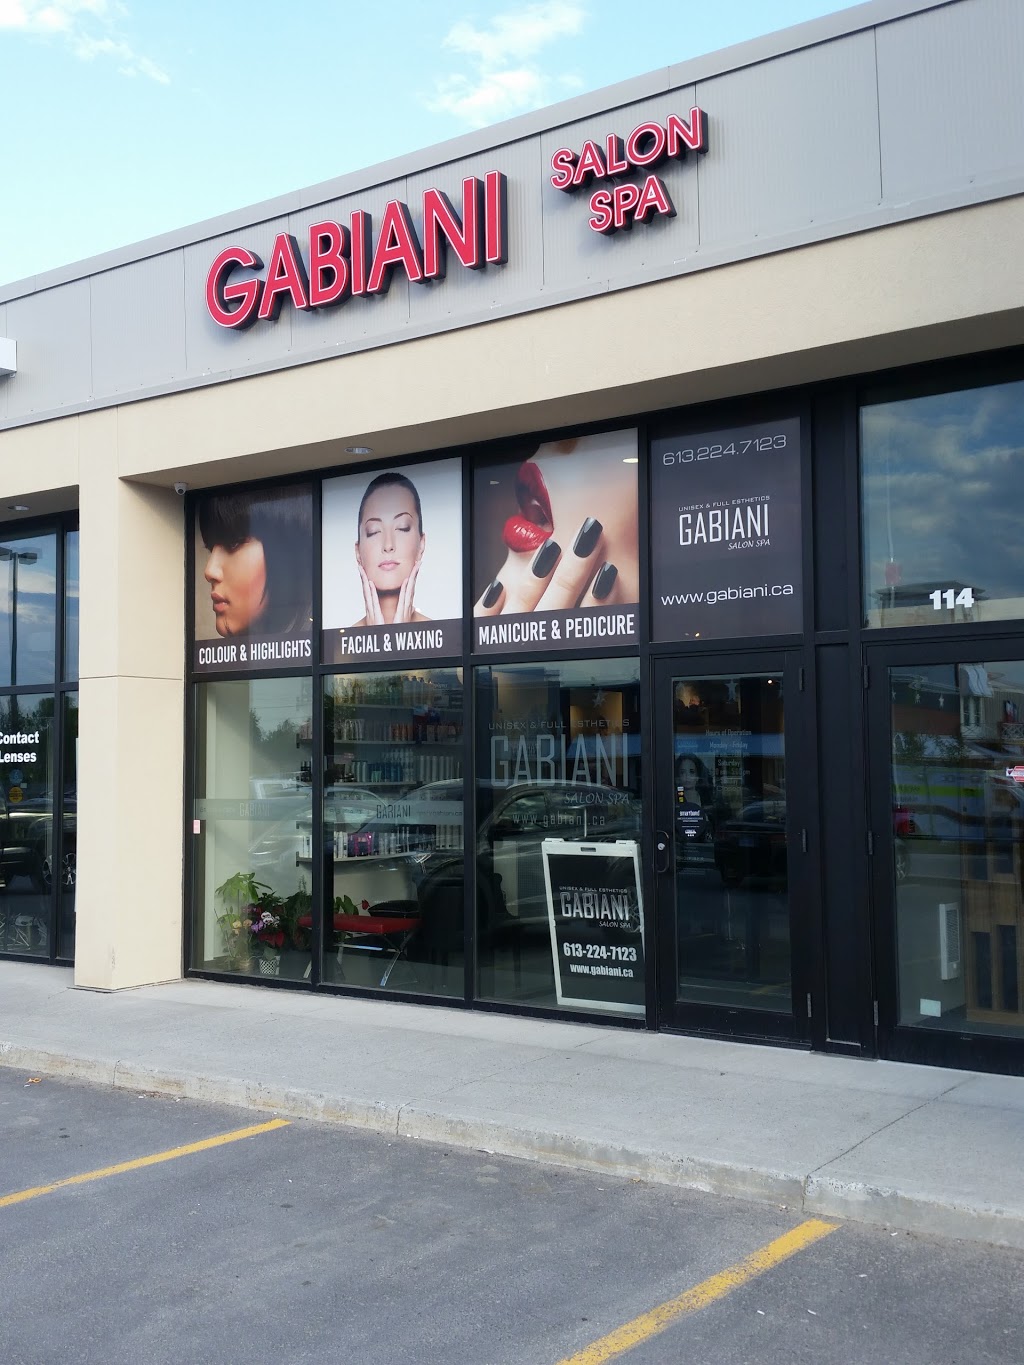 Gabiani Salon Spa | 2900 Gibford Dr #13, Ottawa, ON K1V 2R4, Canada | Phone: (613) 224-7123